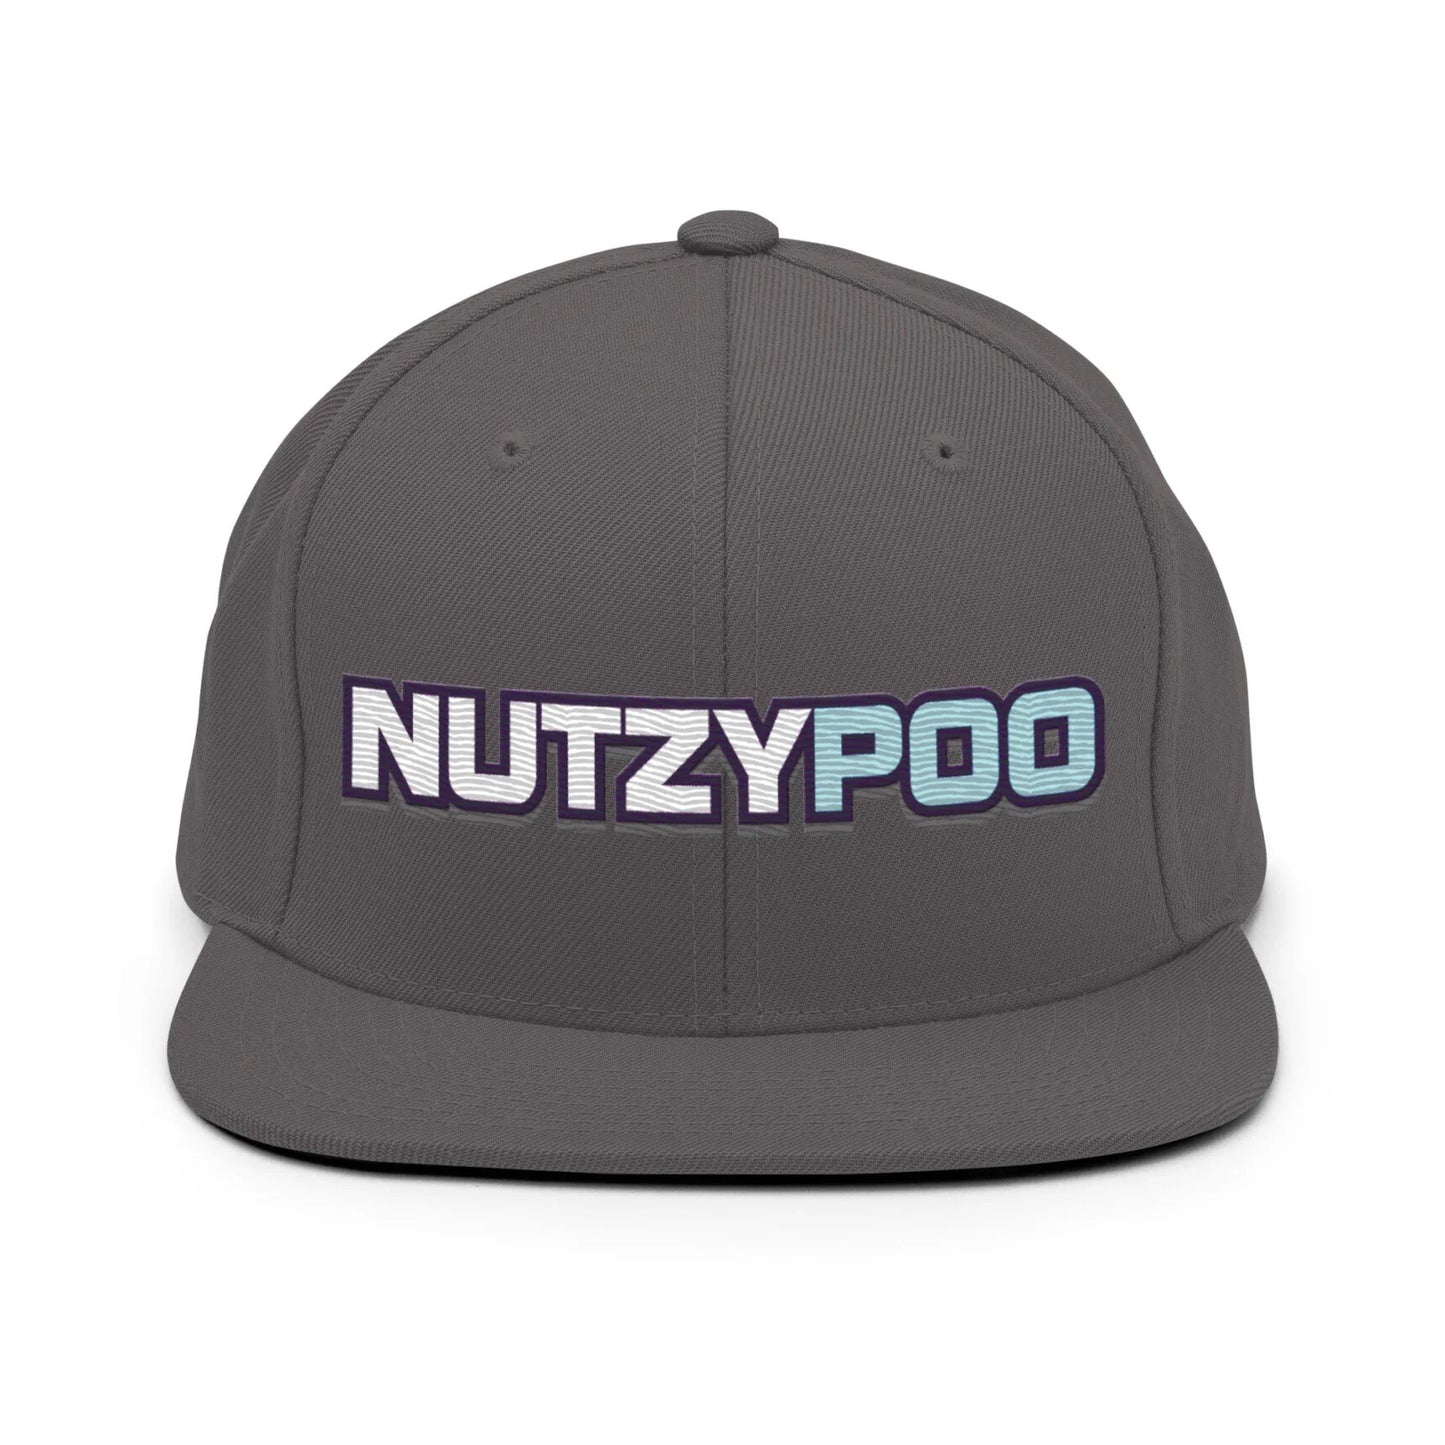 NutzyPoo ShowZone hat in dark grey